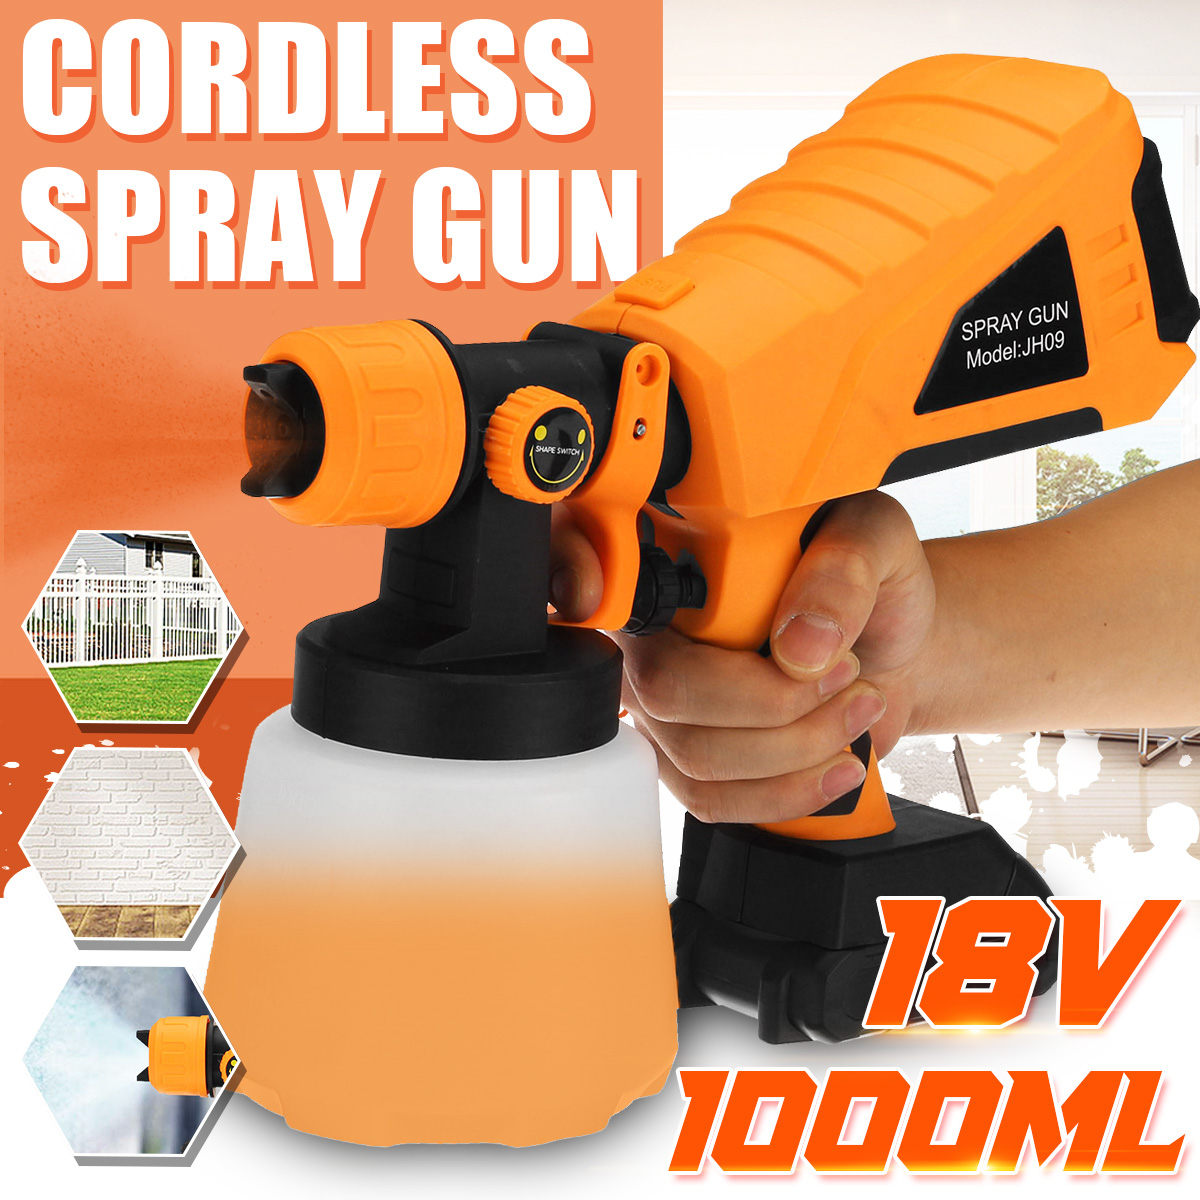 18V-1000ML-High-Power-Electric-Spray-Gun-Household-Spray-Paint-with-Li-ion-Battery-Regulation-Spraye-1863067-1